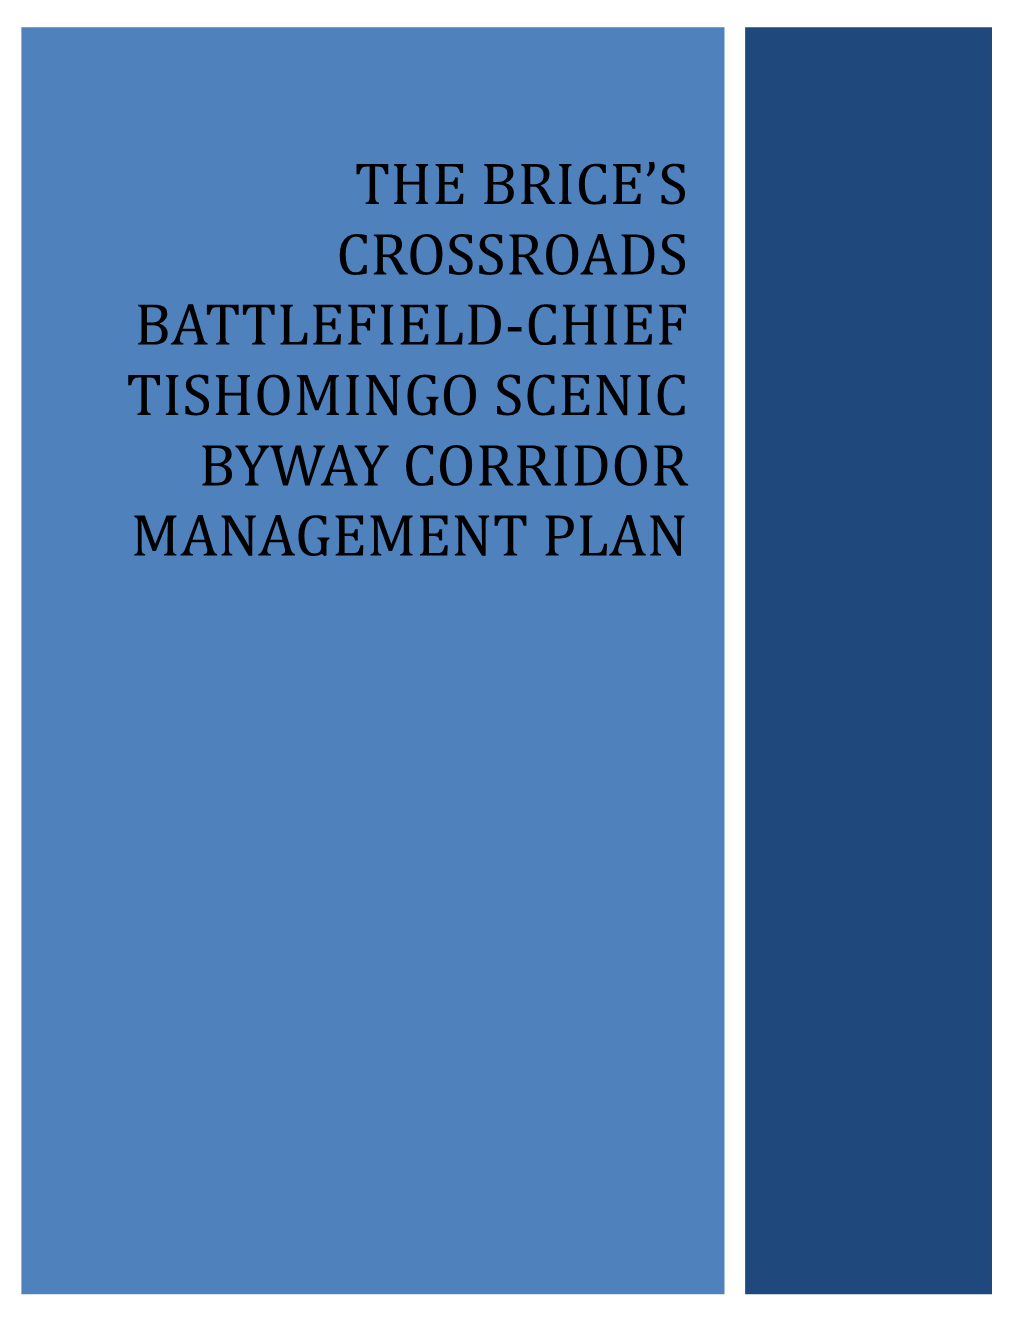 The Brice's Crossroads Battlefield-Chief Tishomingo Scenic Byway Corridor Management Plan